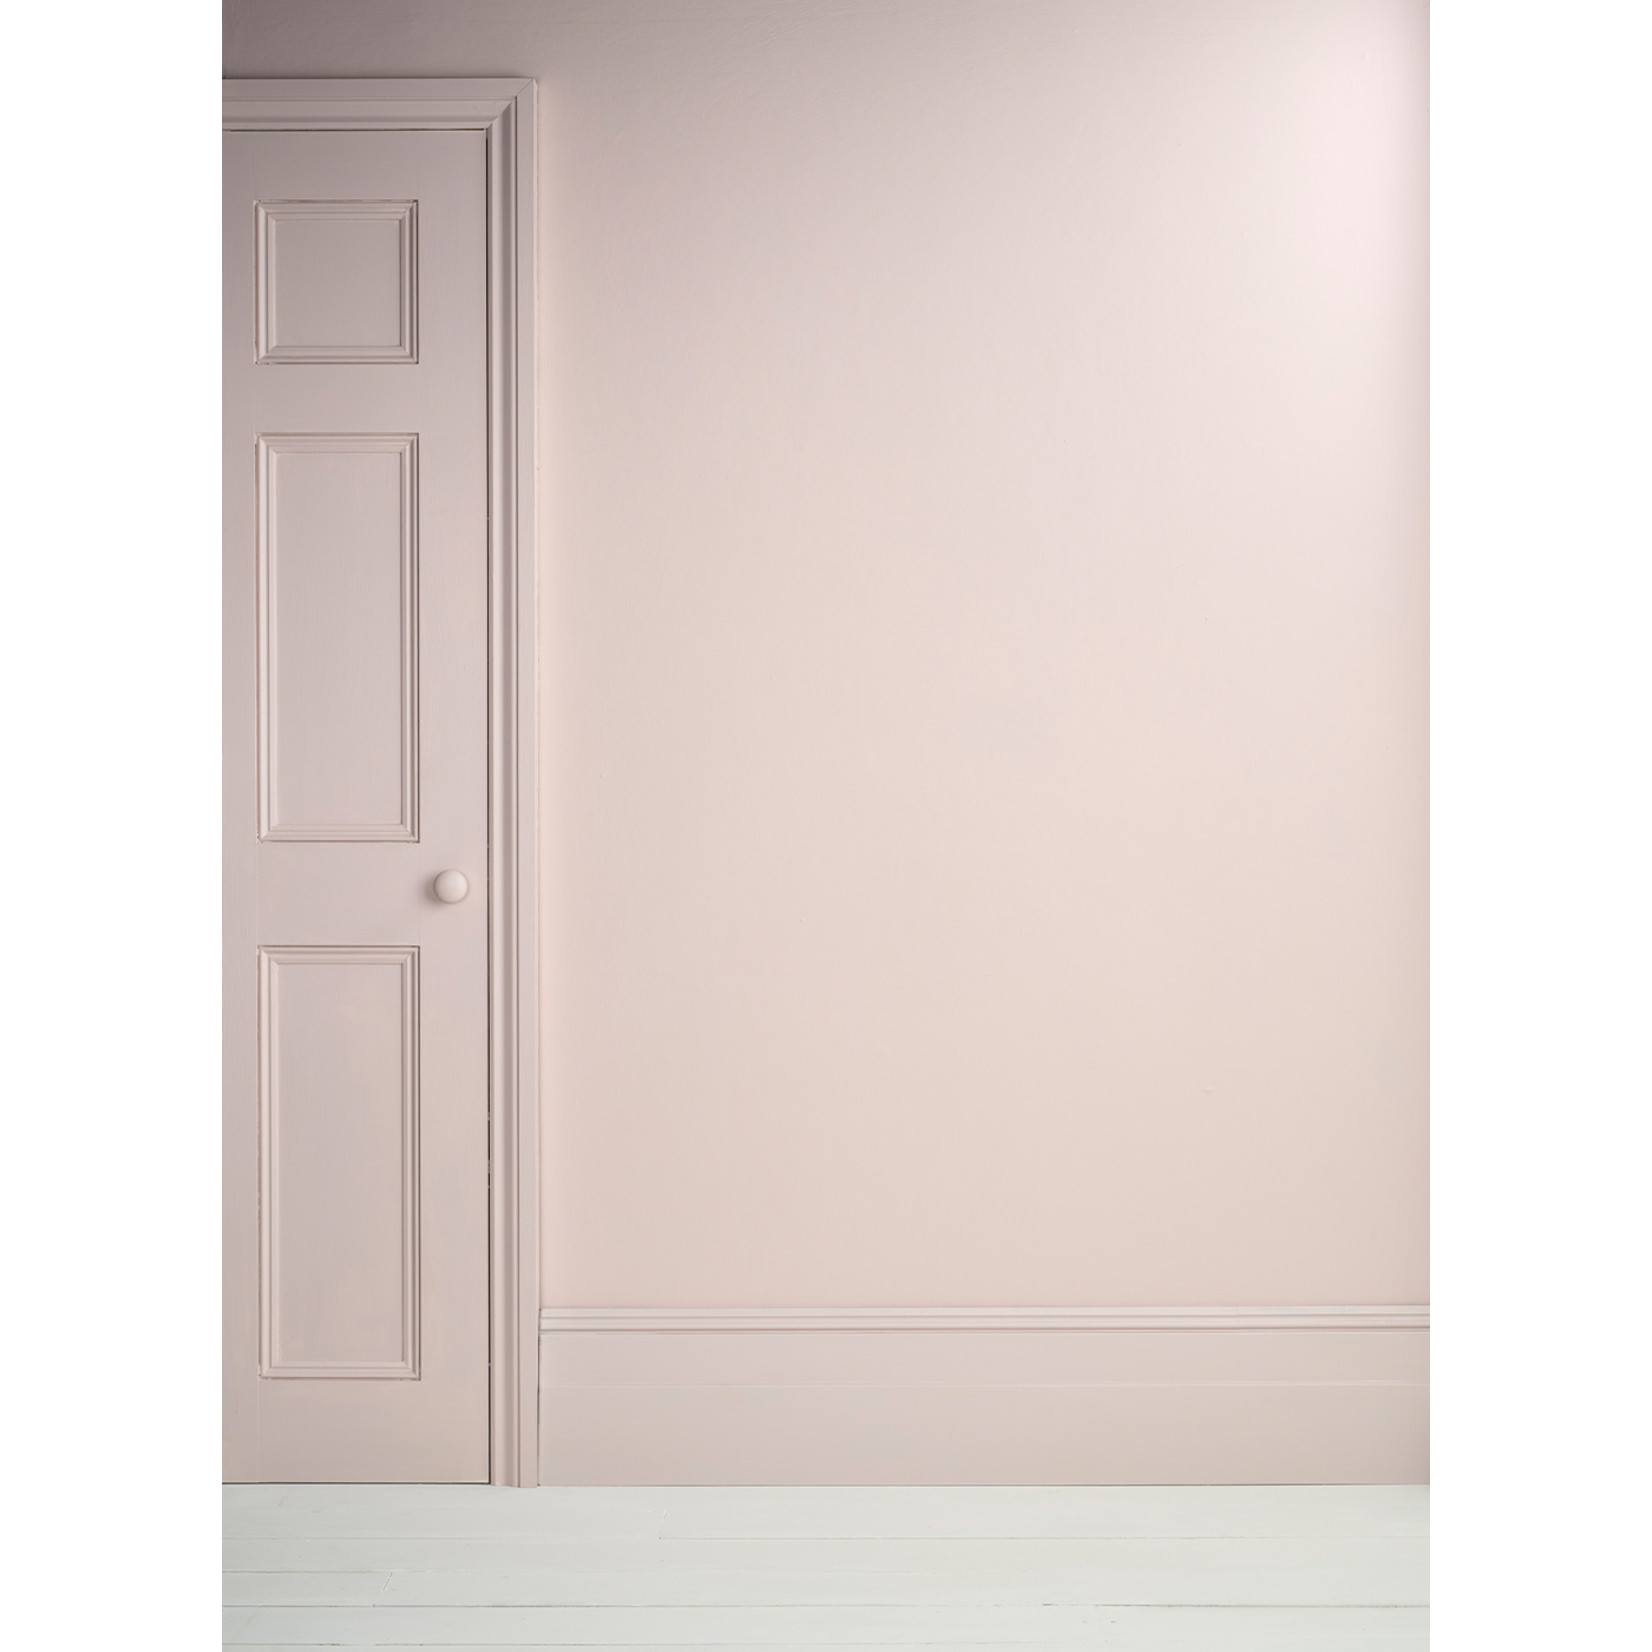 Light Pink Wall Paint, Pointe Silk